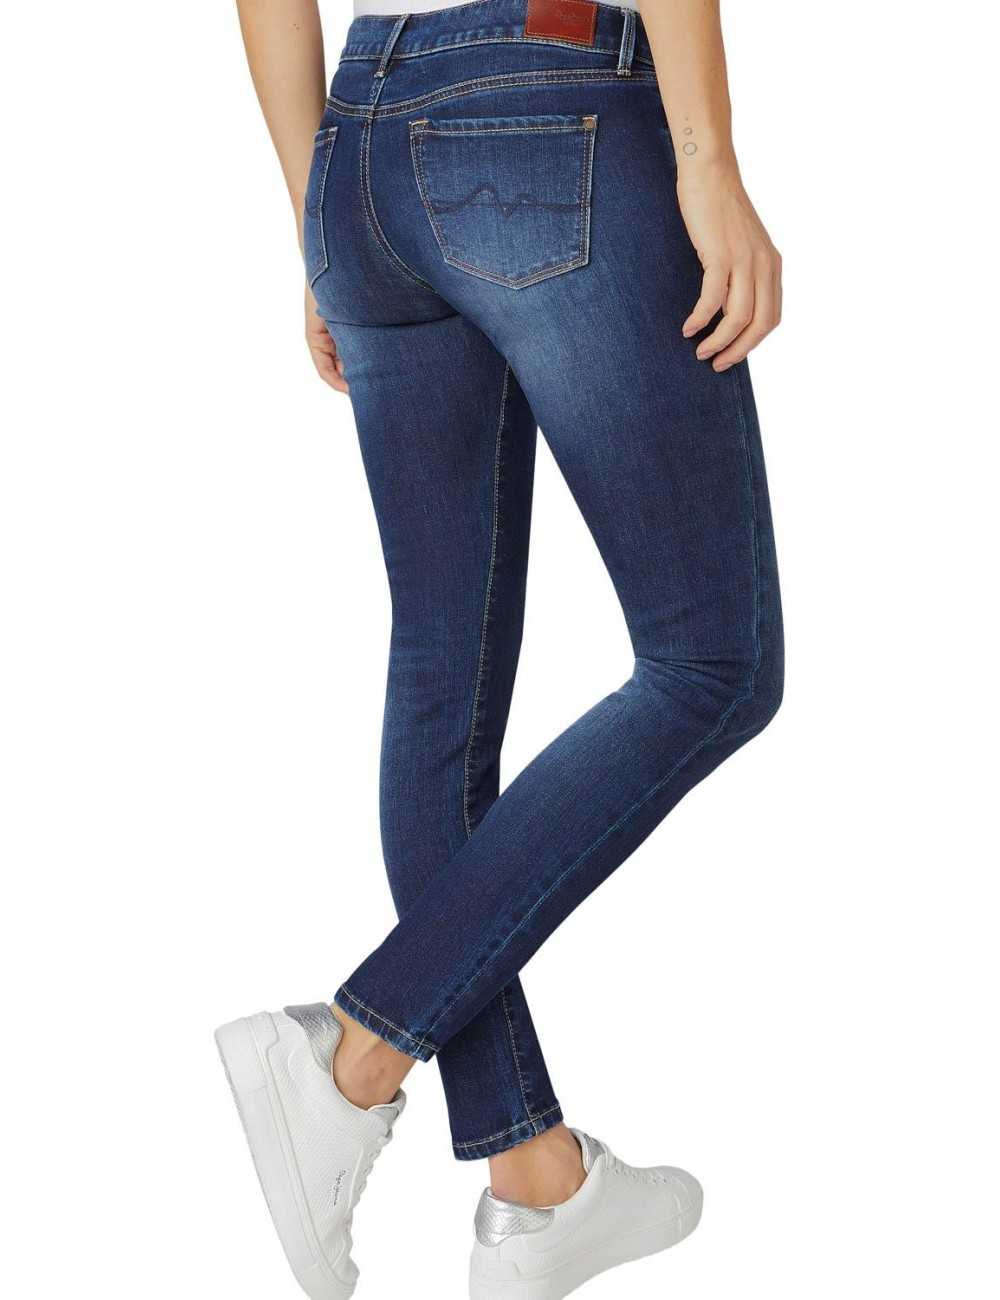 Pepe Jeans Soho jeans donna denim blu scuro - Jeans & Pantaloni Donna